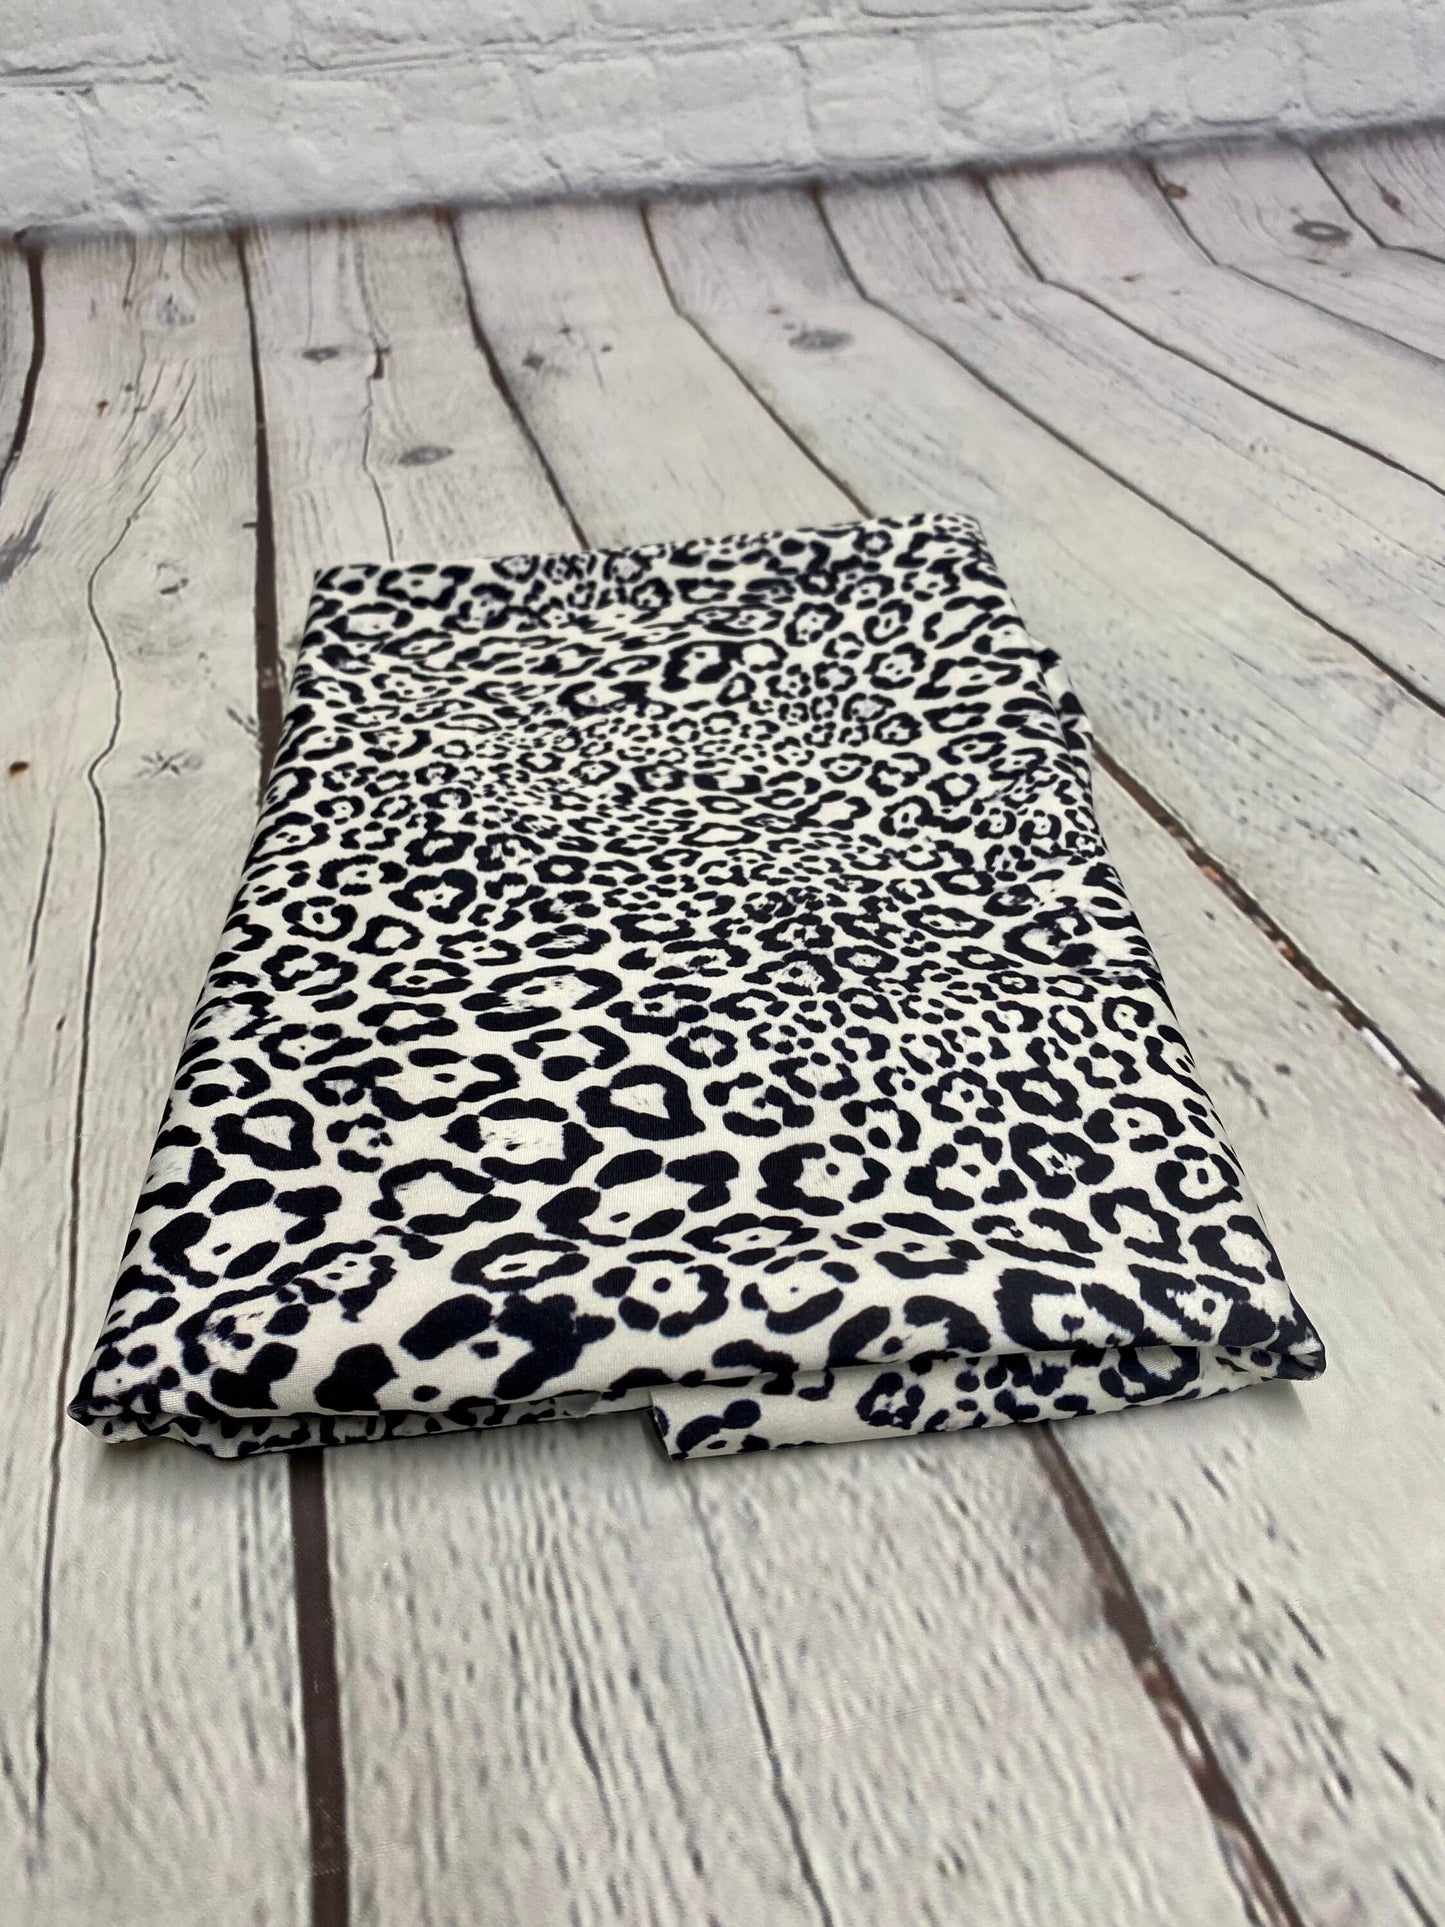 4 Way Stretch Print Nylon Spandex Fabric By The Yard Tricot Swim Wear Bikini Active Wear Black White  Animal Cheetah Leopard Print 280 GSM